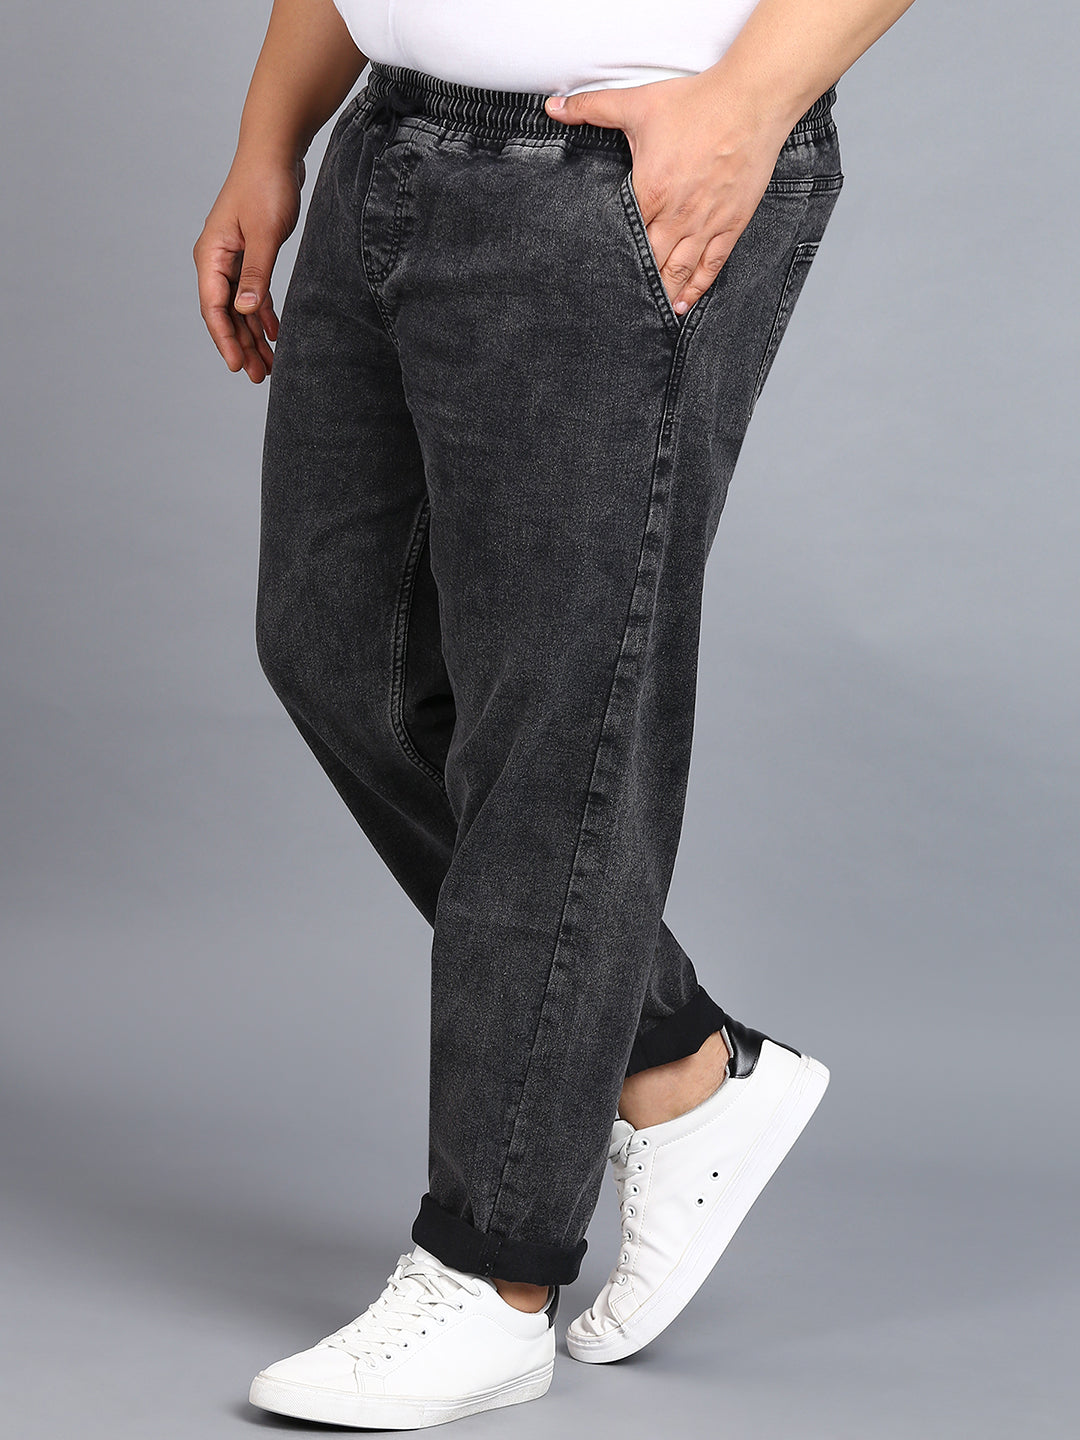 Urbano Plus Men's Jet Black Regular Fit Washed Jogger Jeans Stretchable